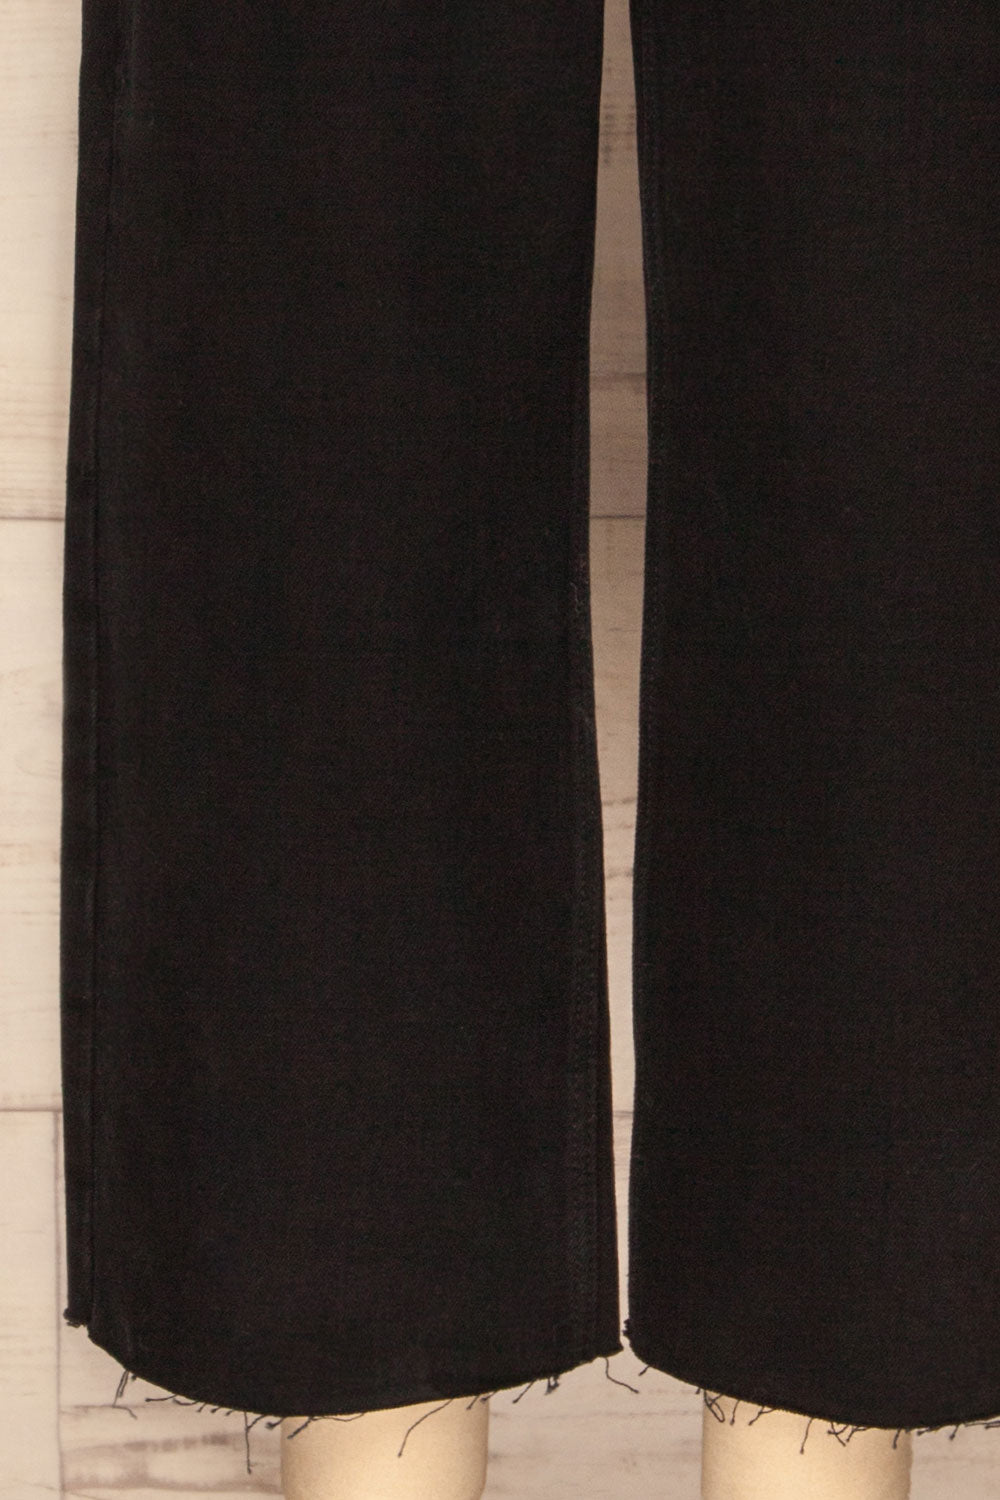 Nikea Black Cropped Wide Leg Jeans | La Petite Garçonne